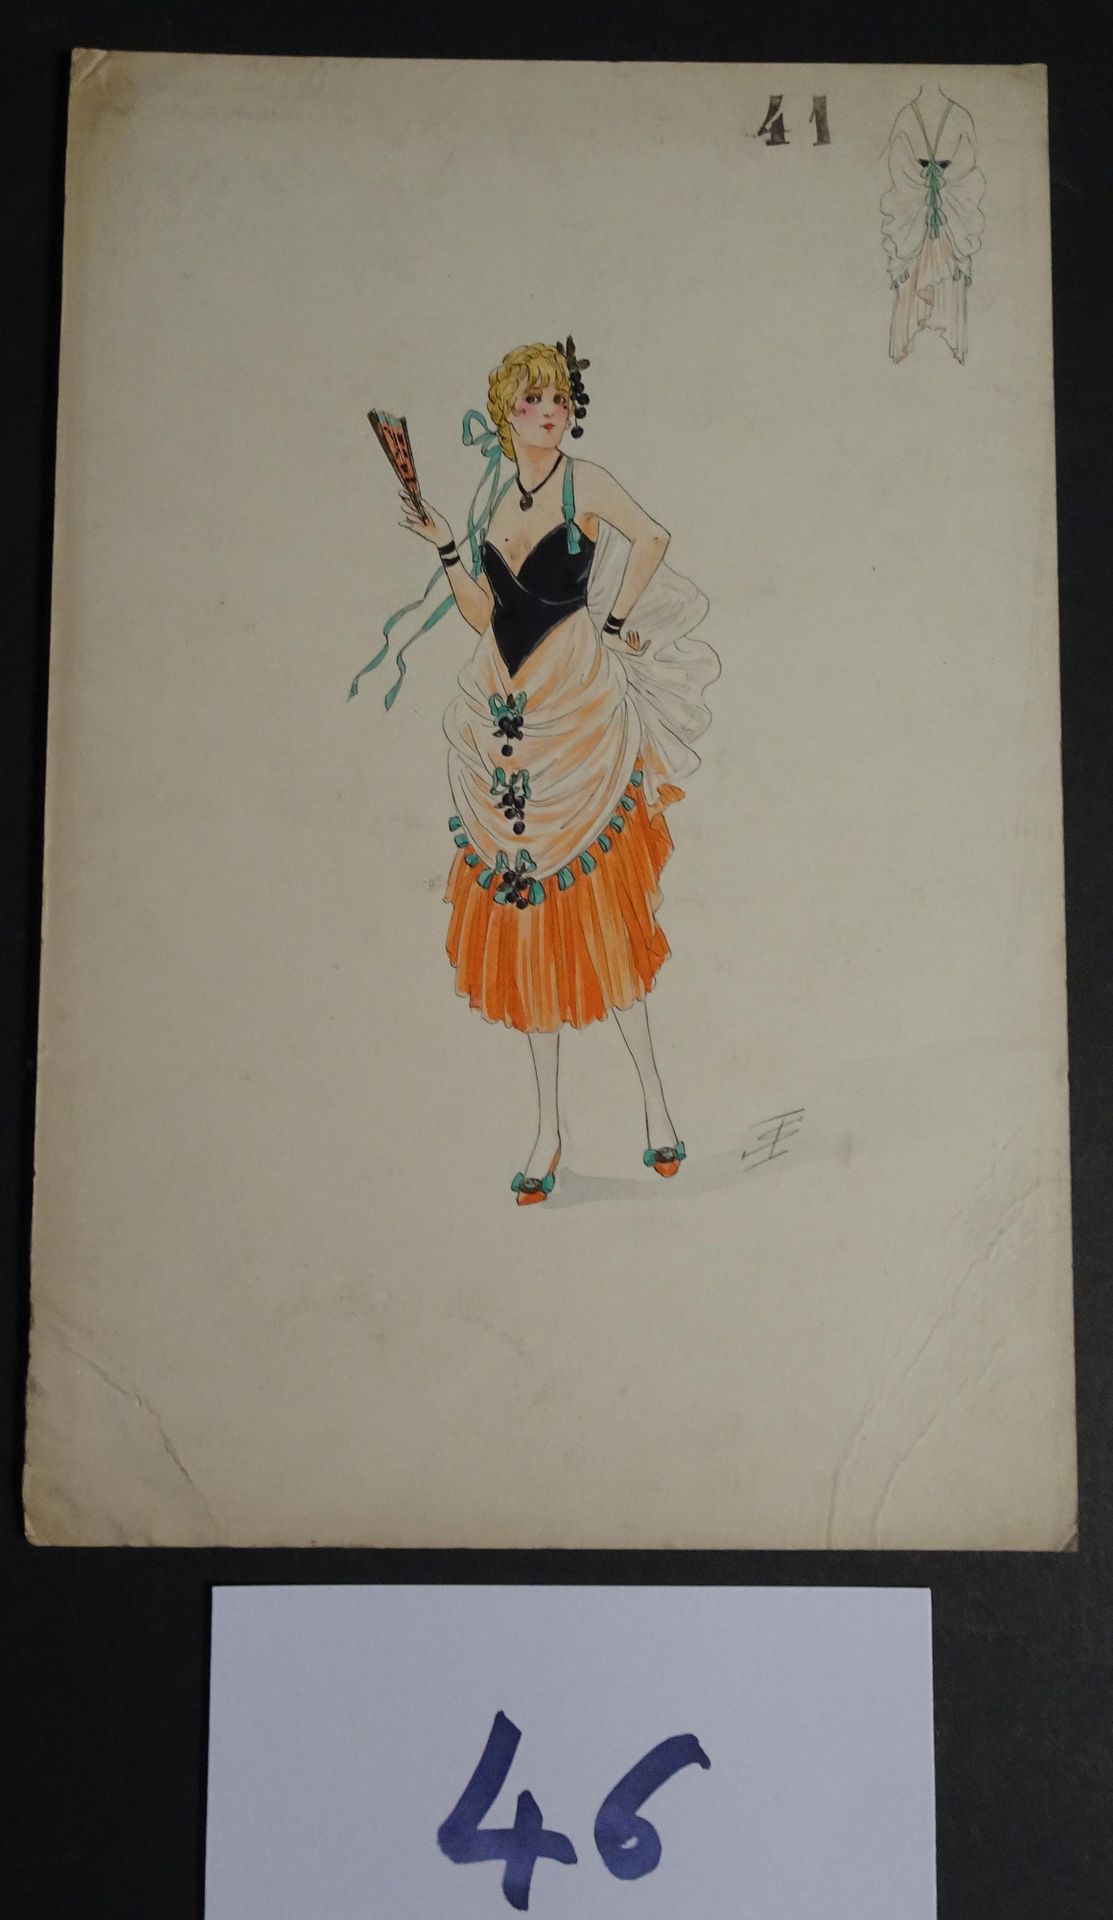 SOKOLOFF SOKOLOFF IGOR (principios del siglo XX) 

"Mujer con un abanico naranja&hellip;